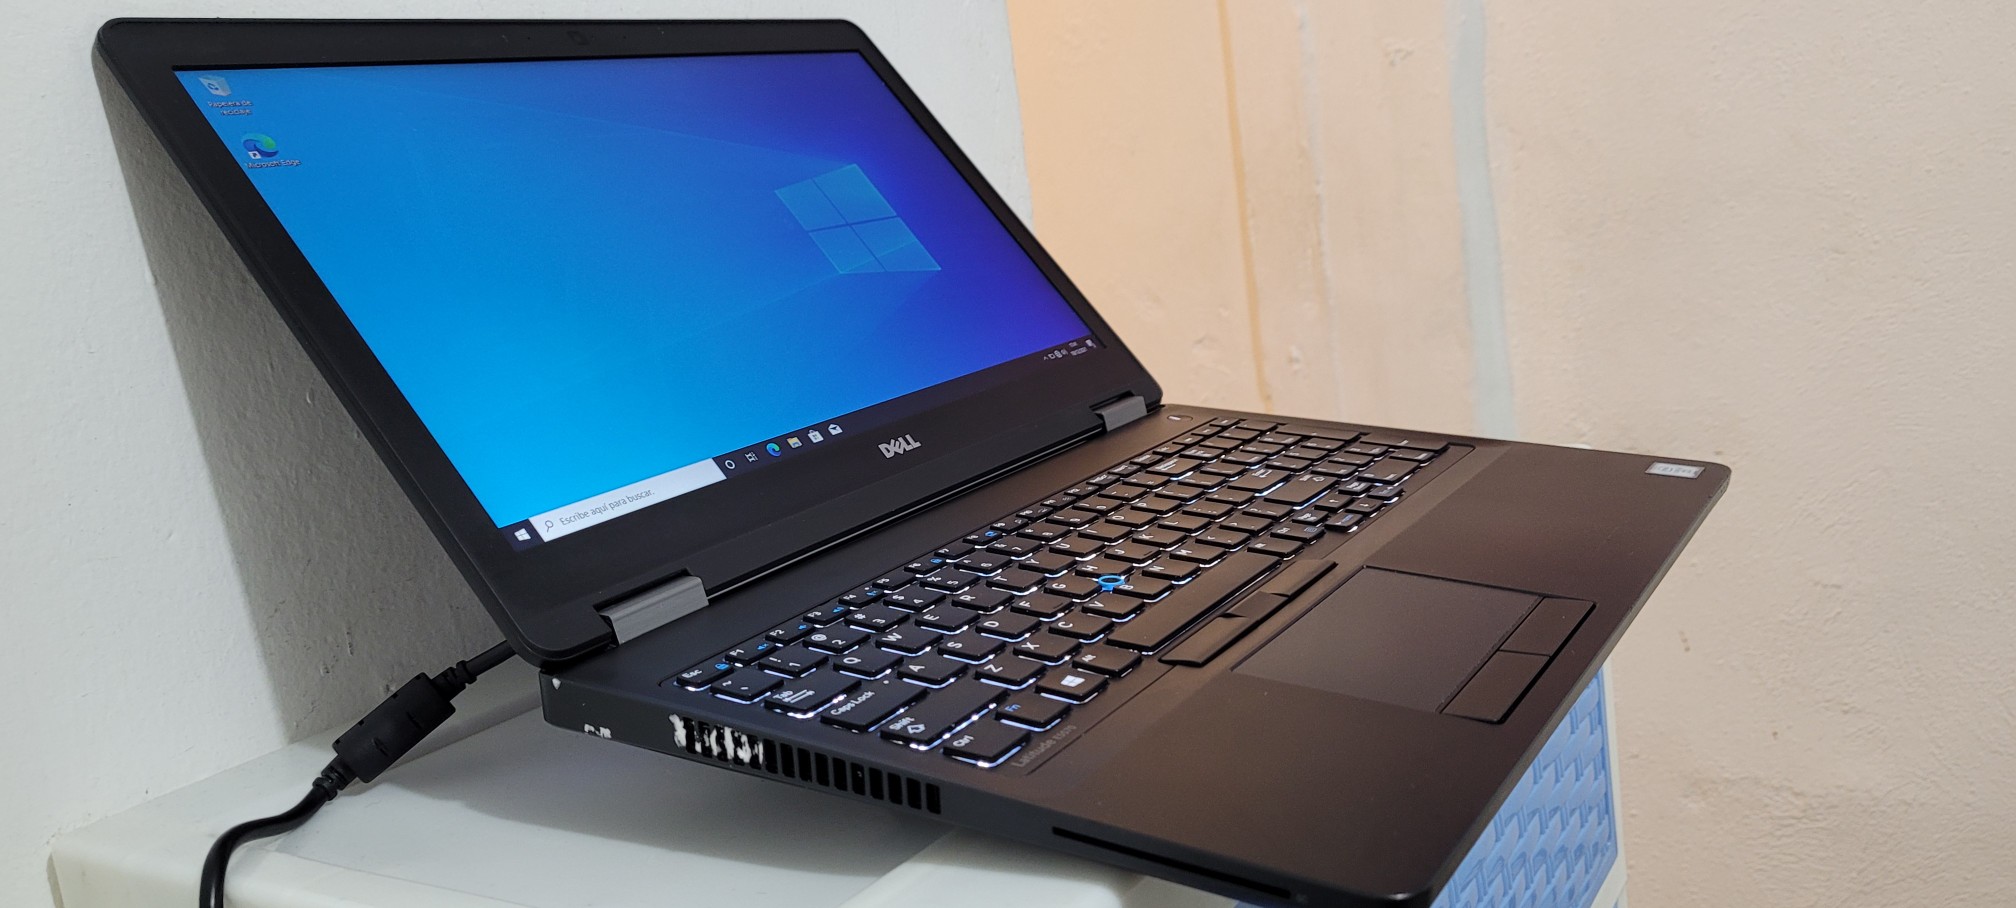 computadoras y laptops - Dell 5570 17 Pulg Core i5 6ta Gen Ram 8gb ddr4 Disco 256gb SSD Solido hdmi 1